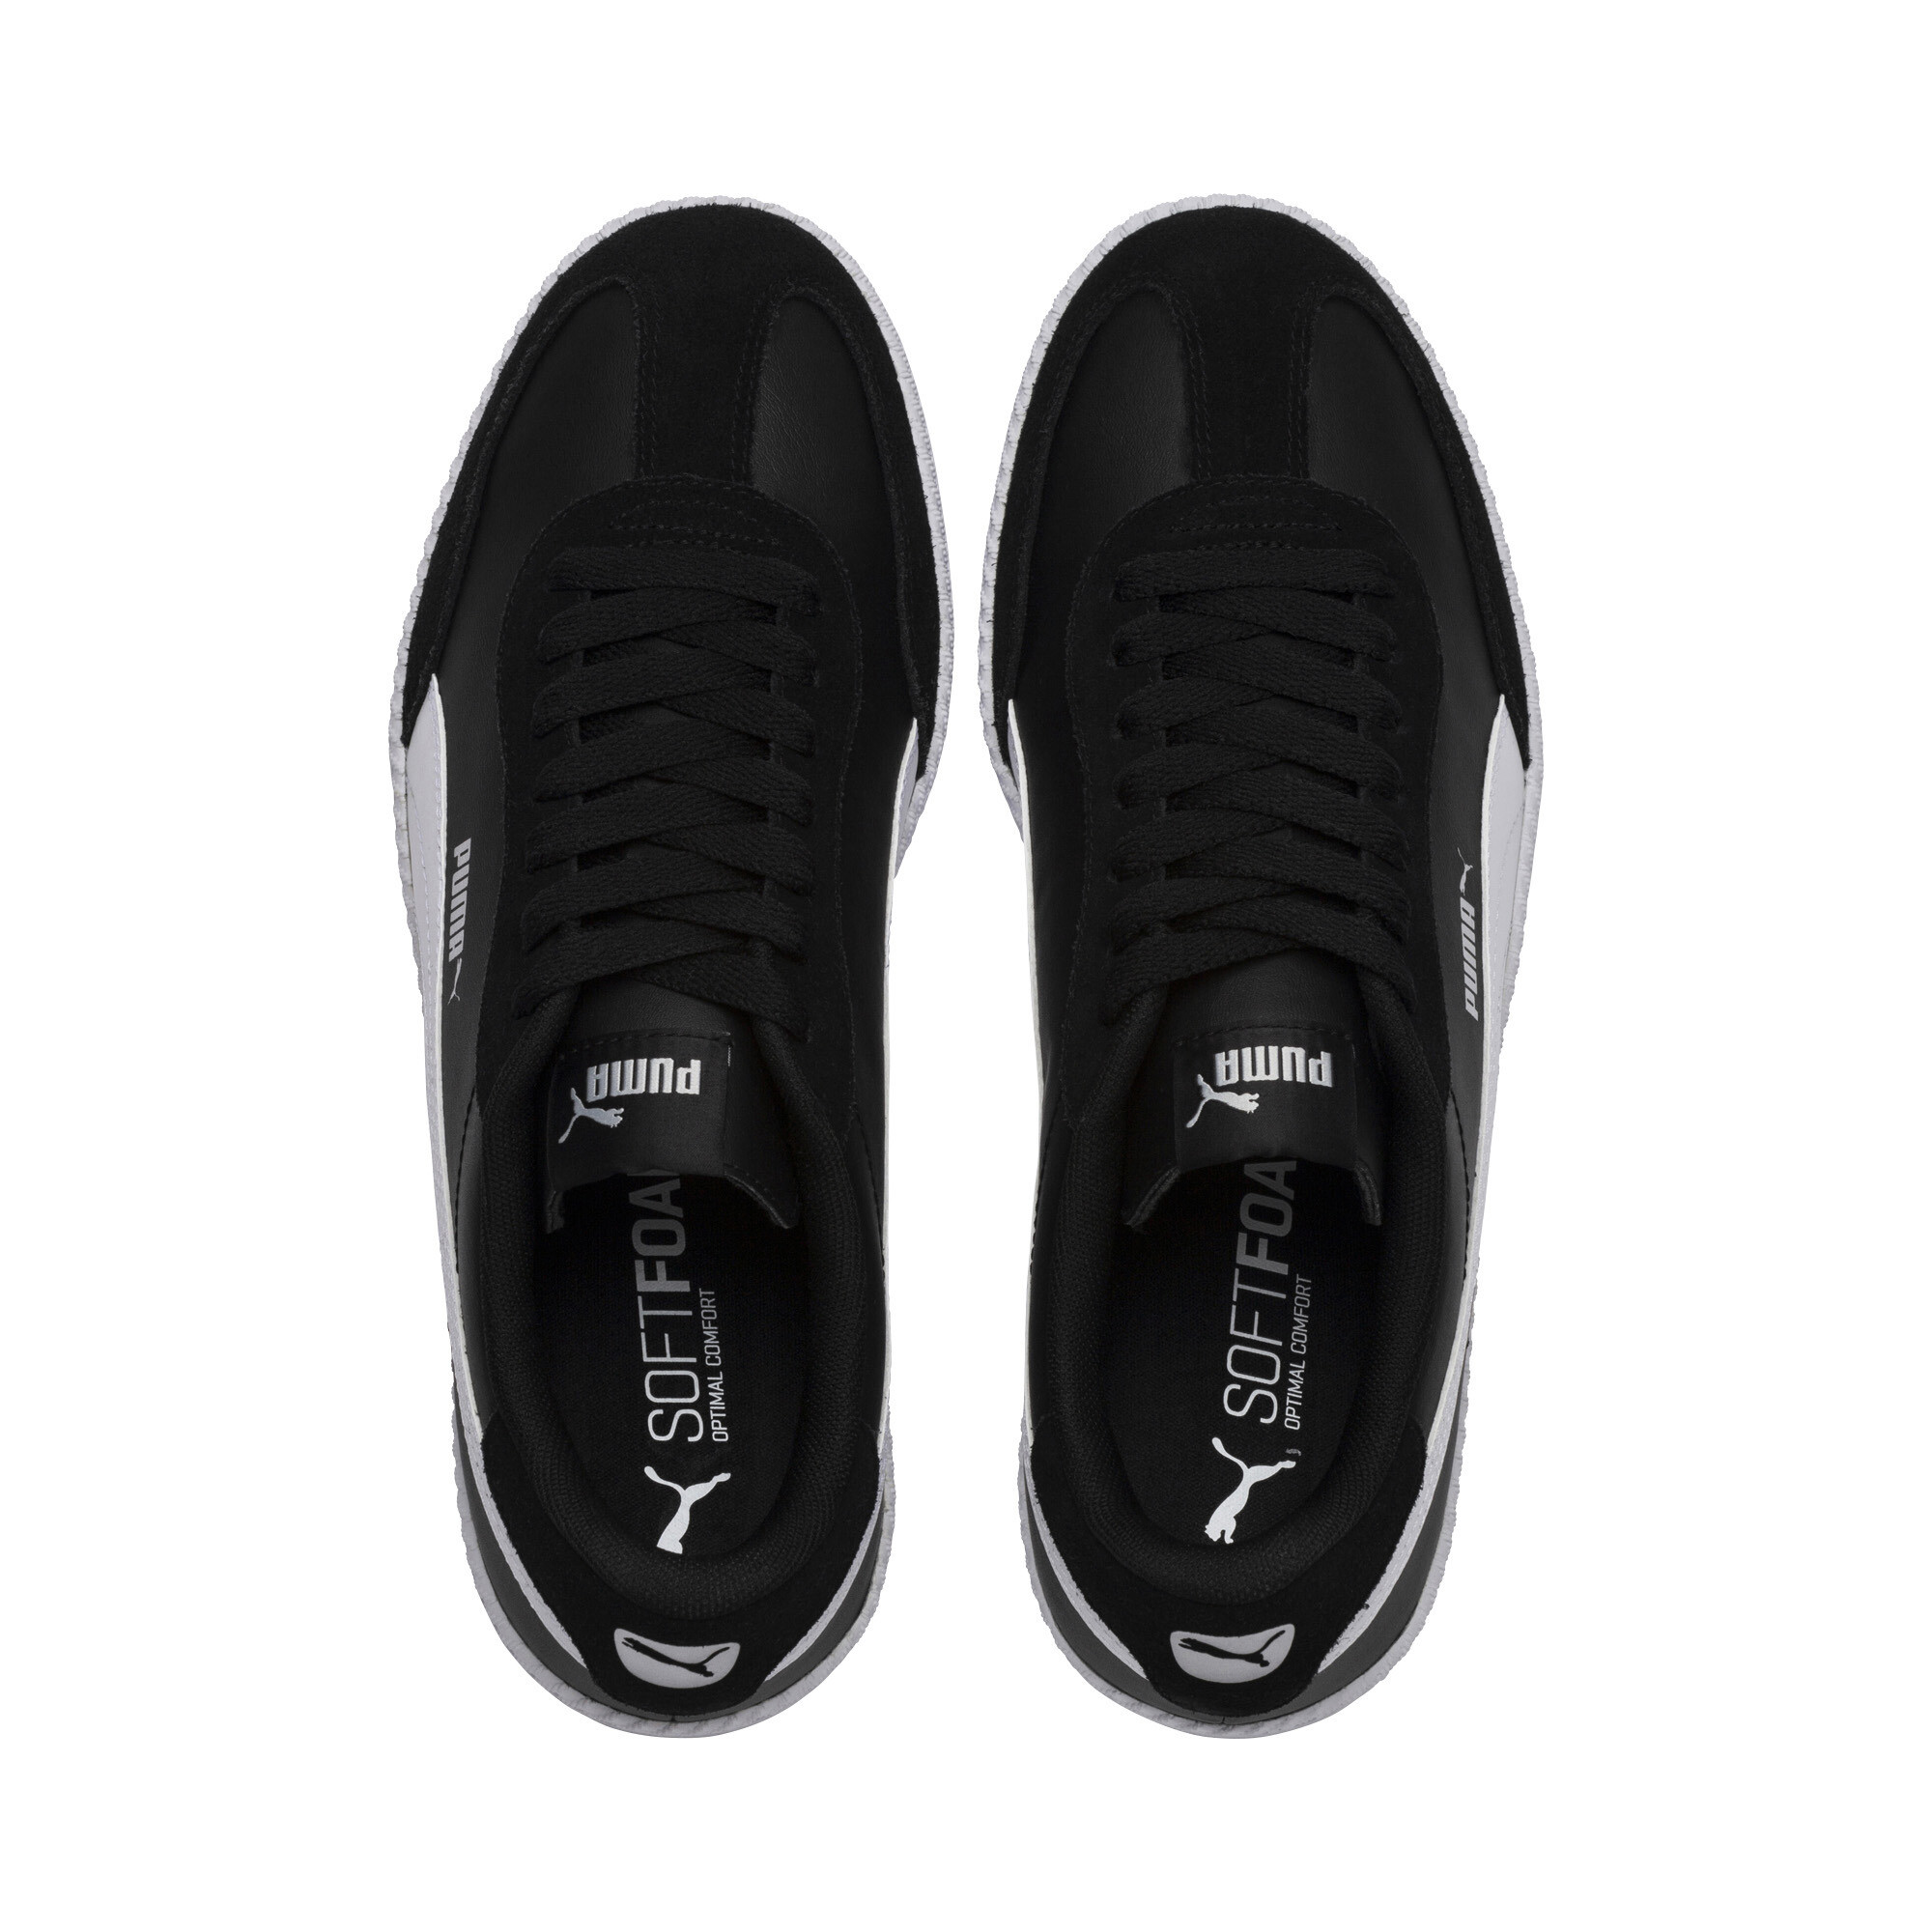 PUMA Astro Cup Sneakers Men Shoe Basics | eBay